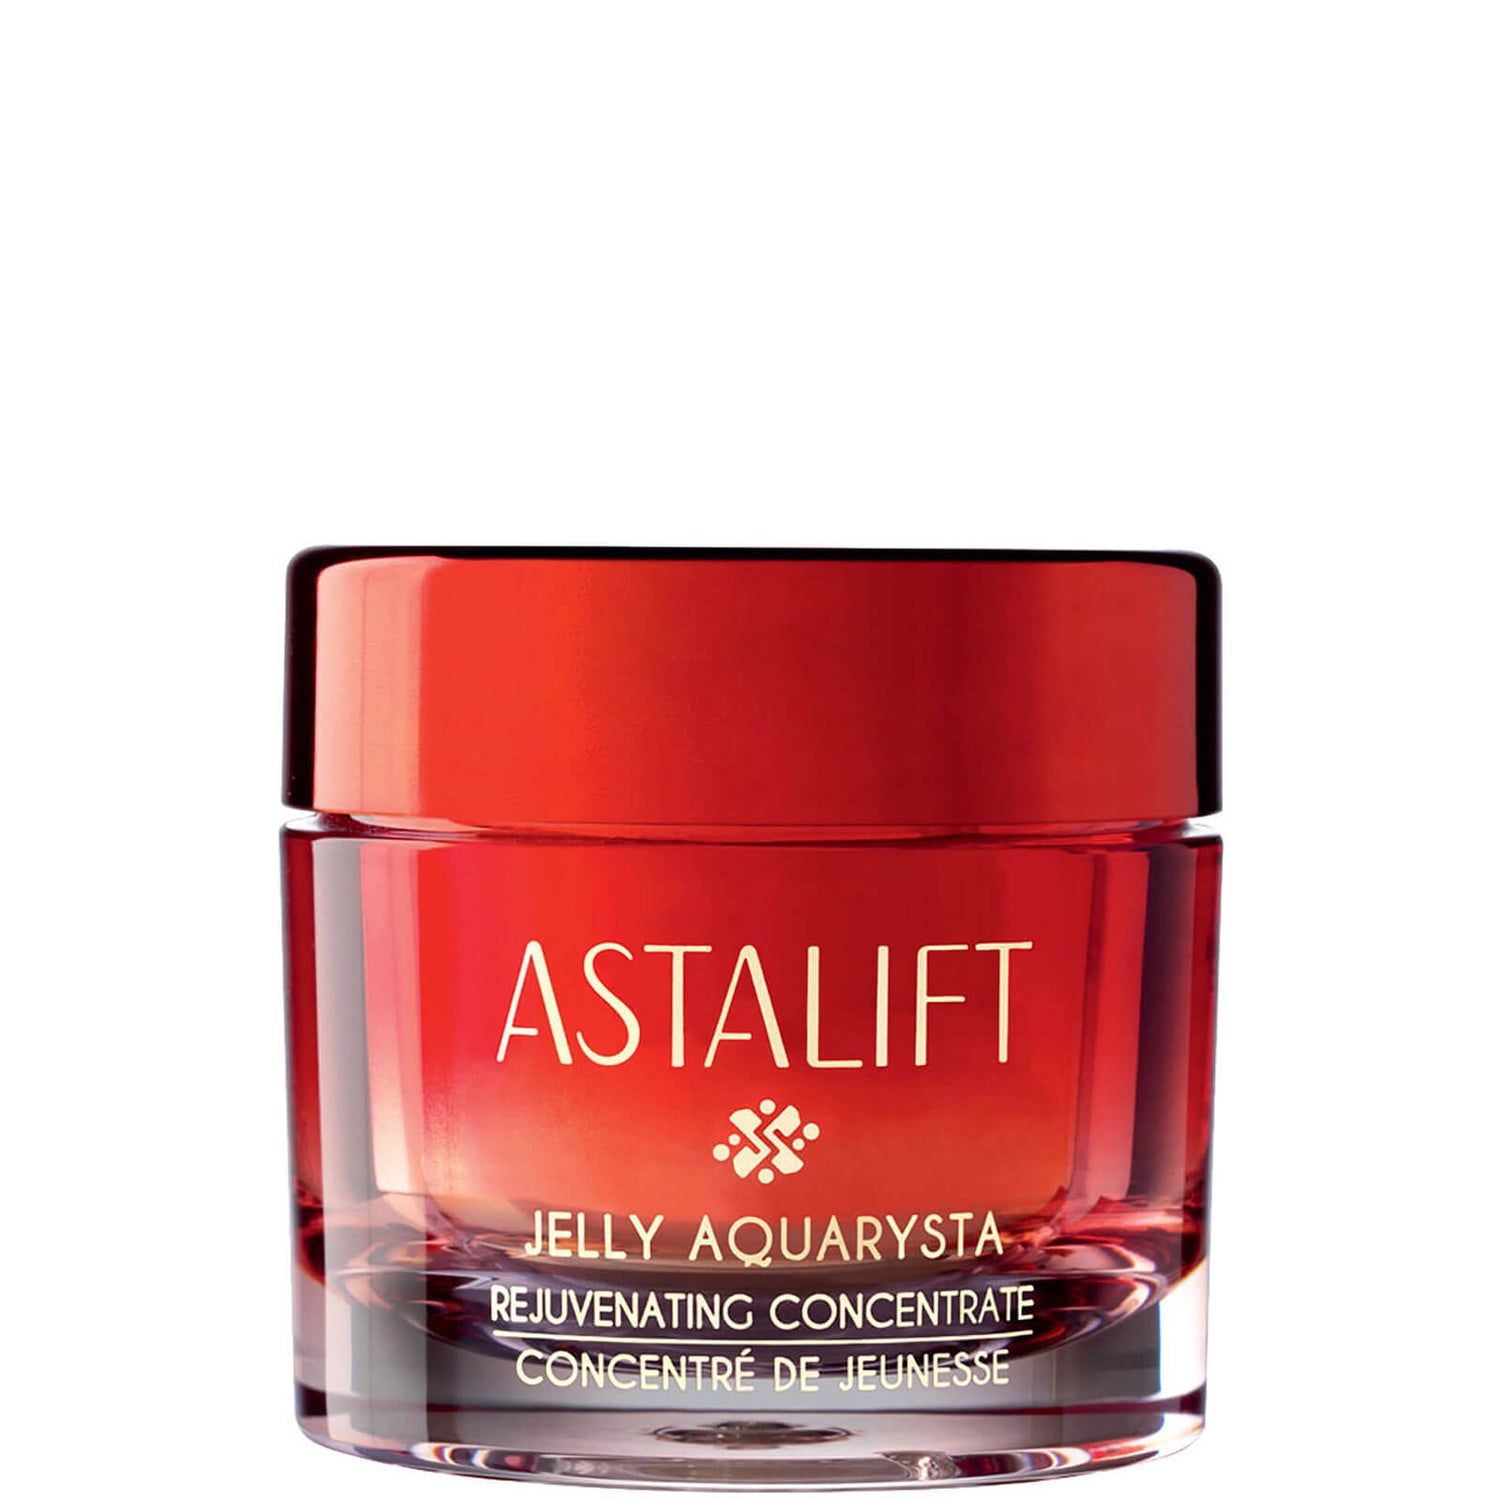 Astalift Jelly Aquarysta Rejuvenating Concentrate Serum (60 g)